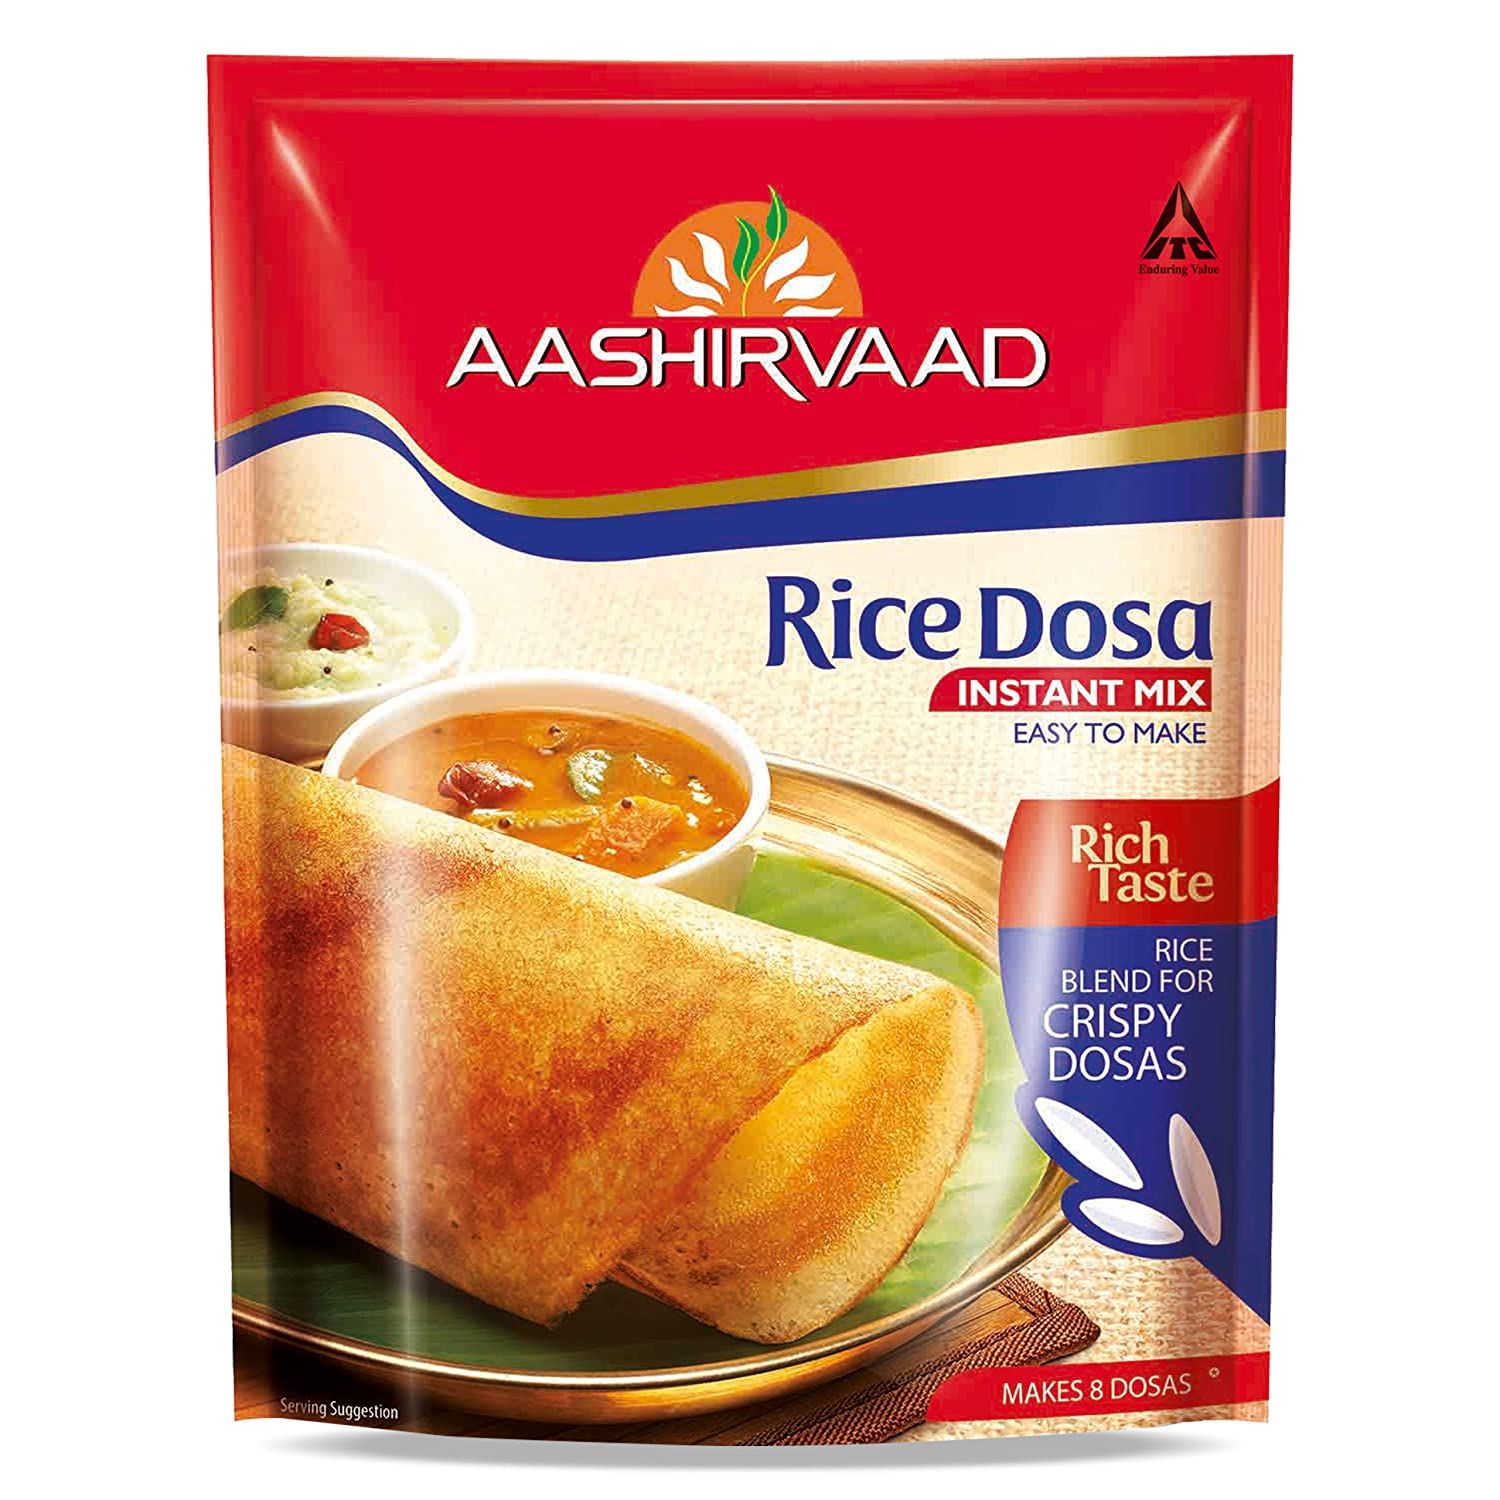 Aashirvaad Rice Dosa Image